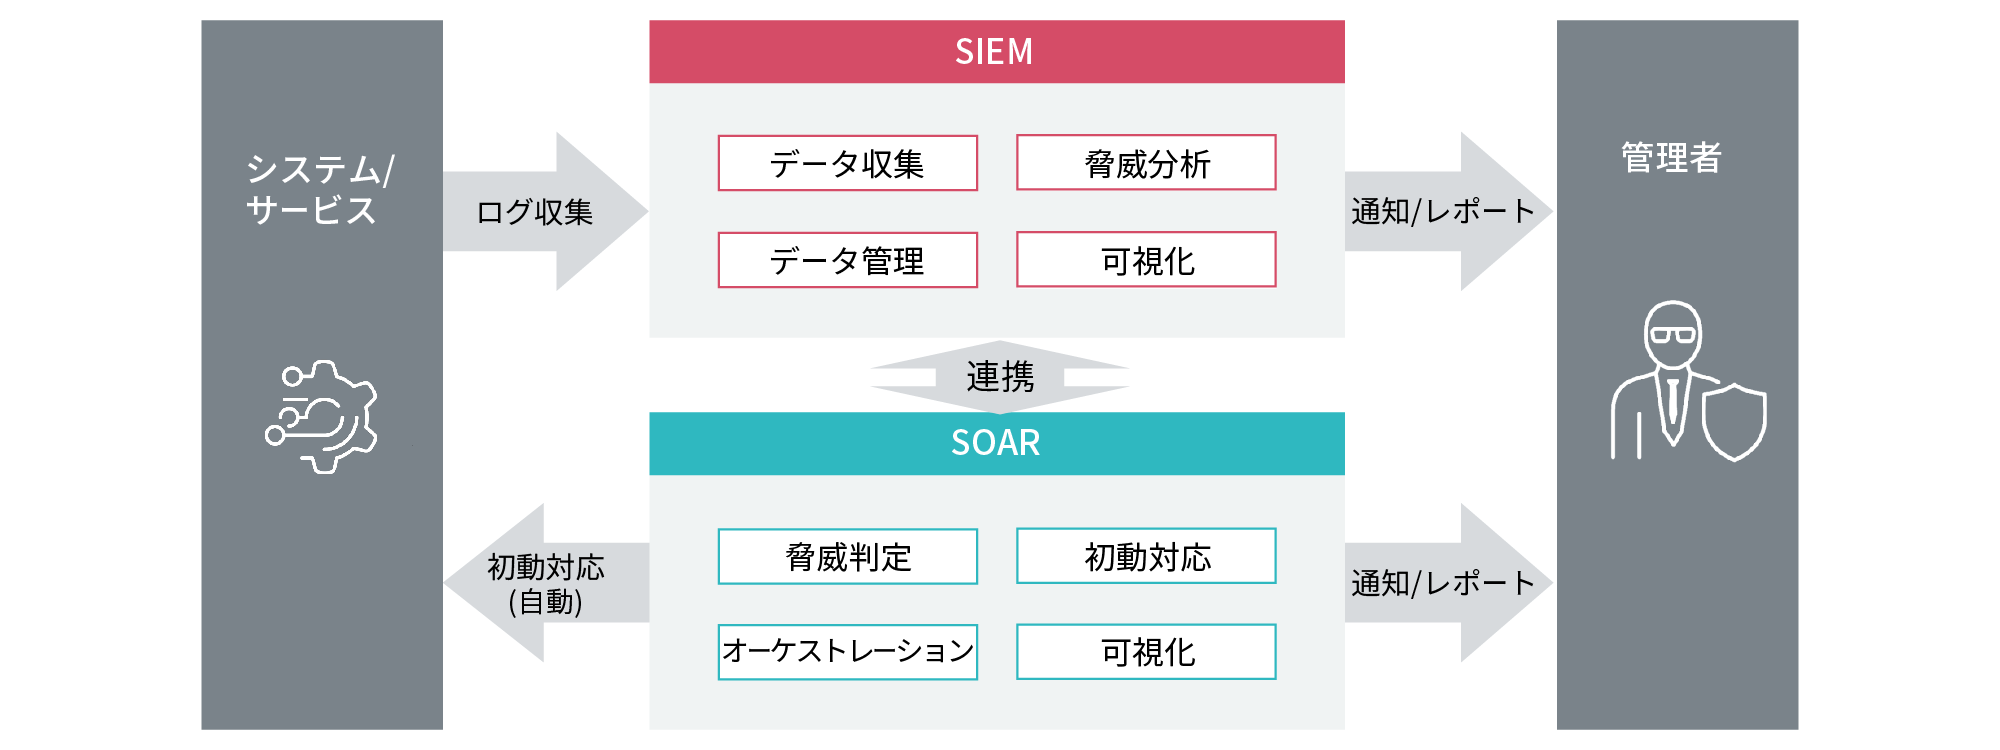 SIEMとSOARの概念イメージ